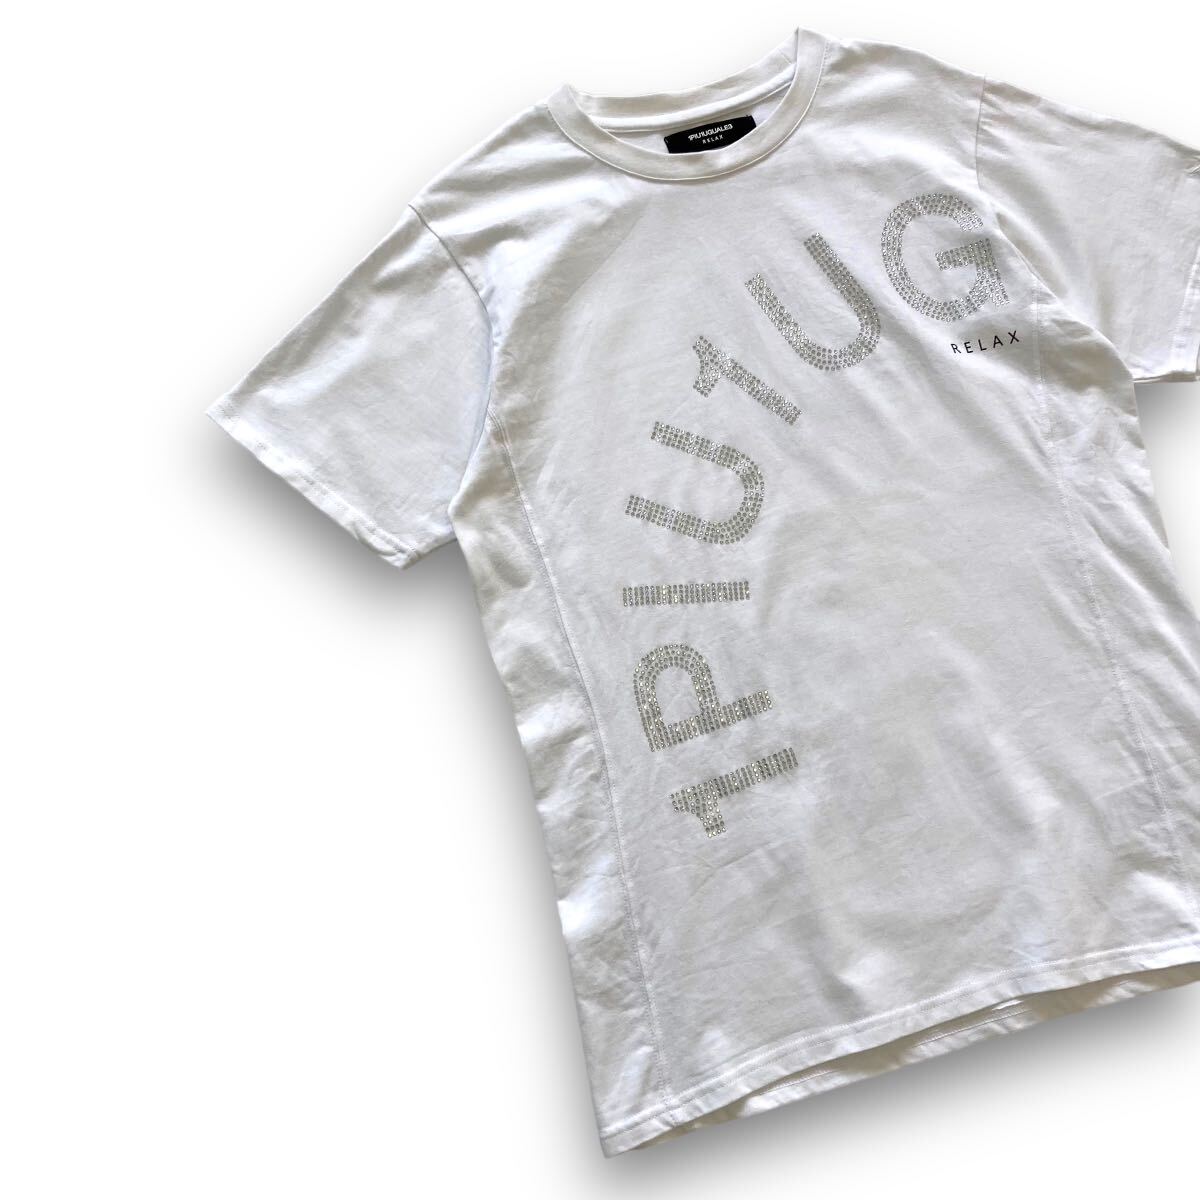 【1PIU1UGUALE3 RELAX】ウノピュウノウグァーレトレリラックス ストーンロゴ 半袖Tシャツ tシャツ ワンポイント刺繍ロゴ 白 ホワイト (L)_画像2